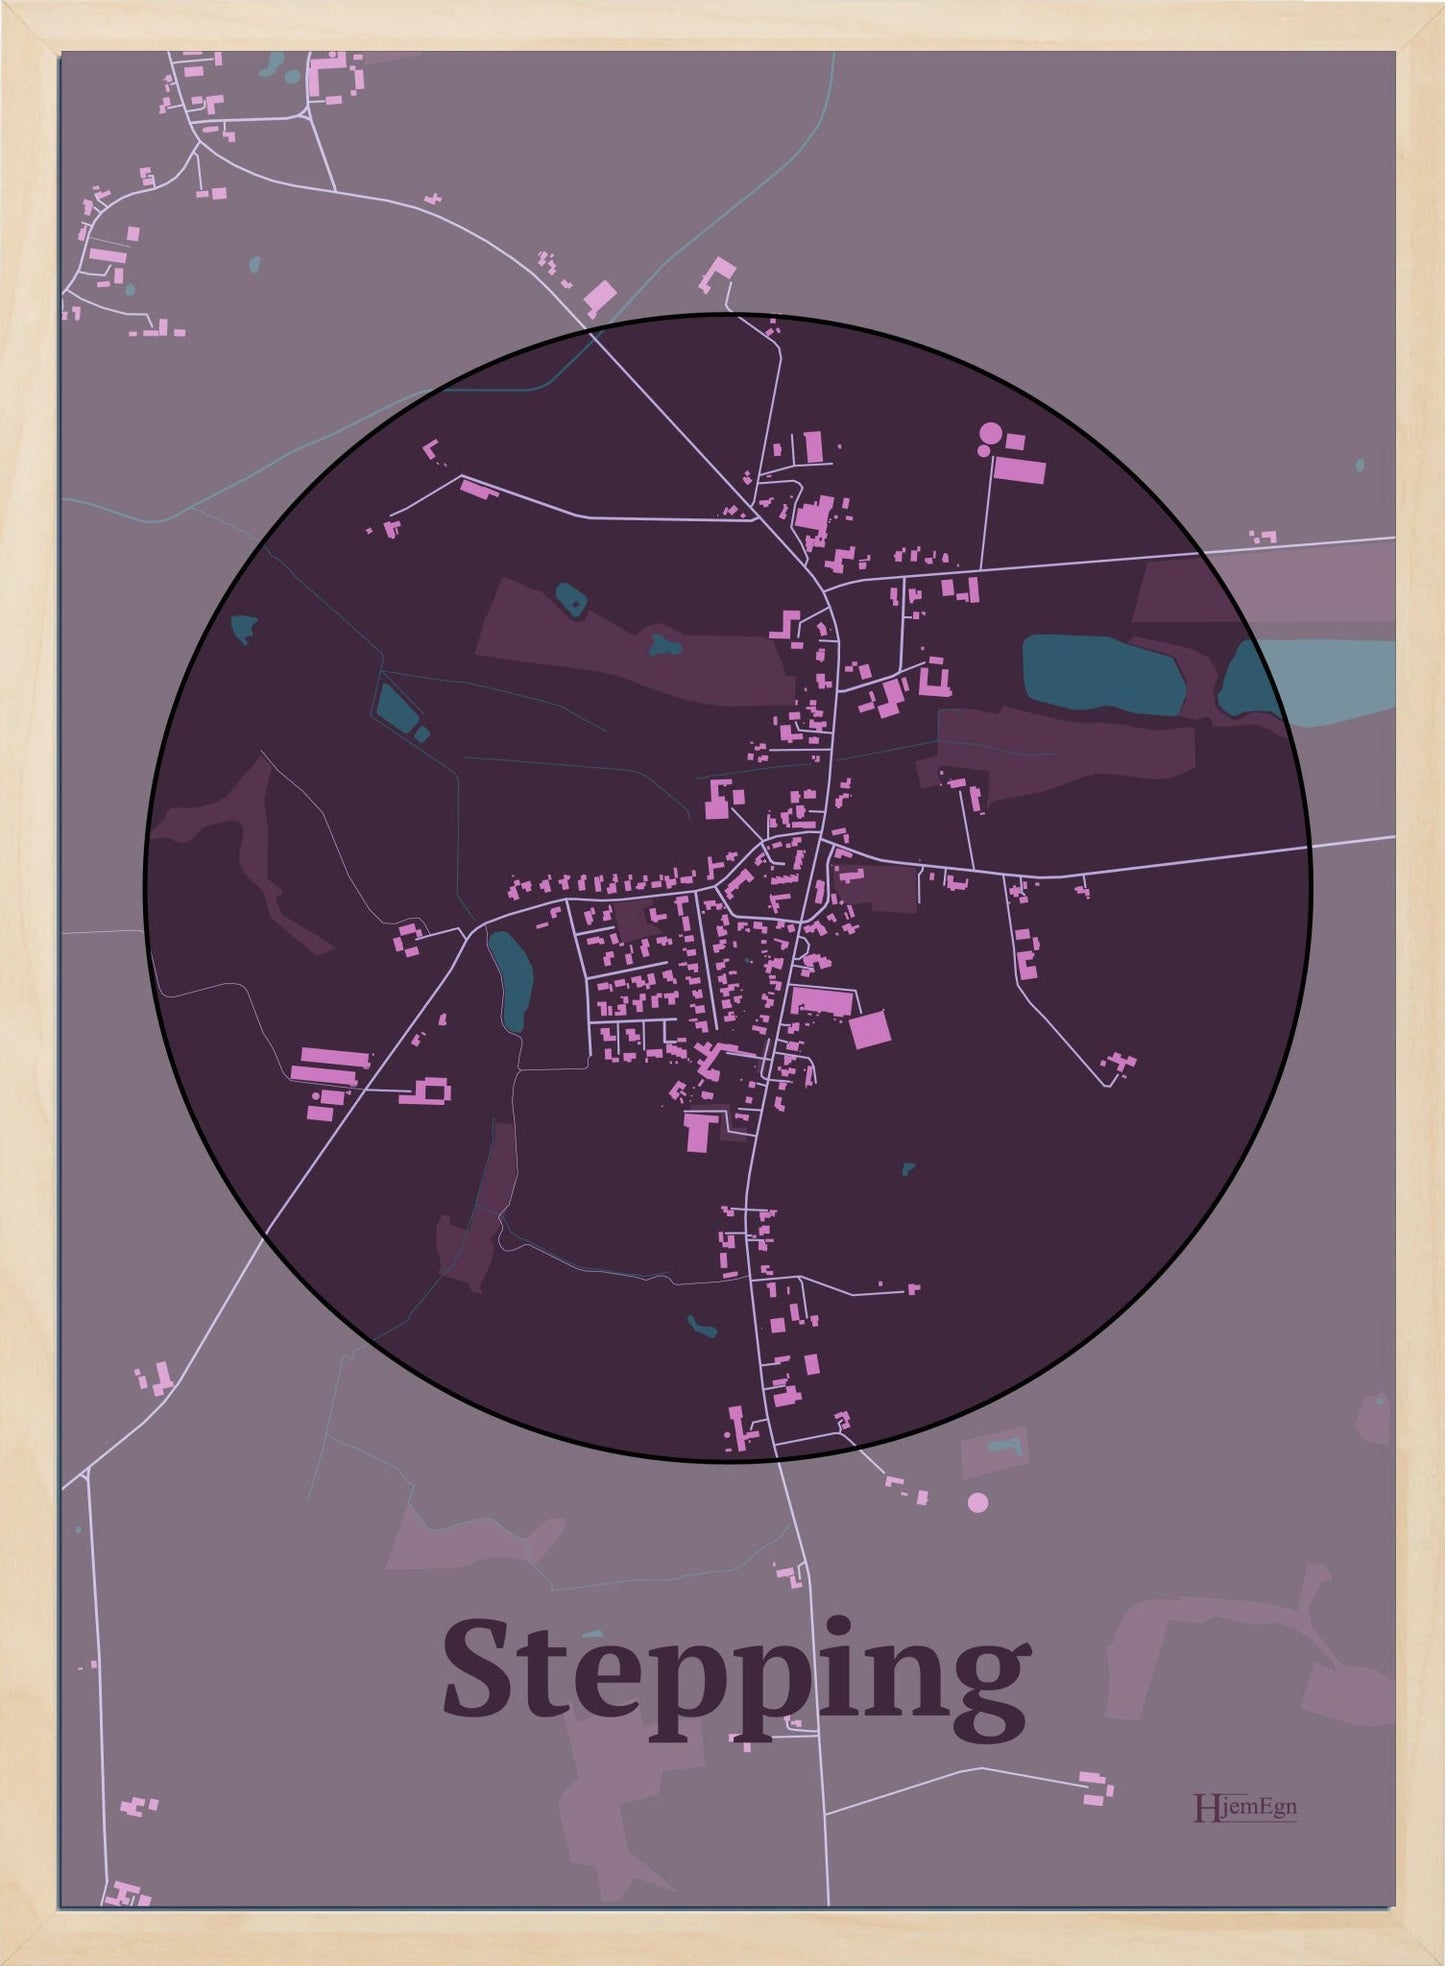 Stepping plakat i farve mørk rød og HjemEgn.dk design centrum. Design bykort for Stepping